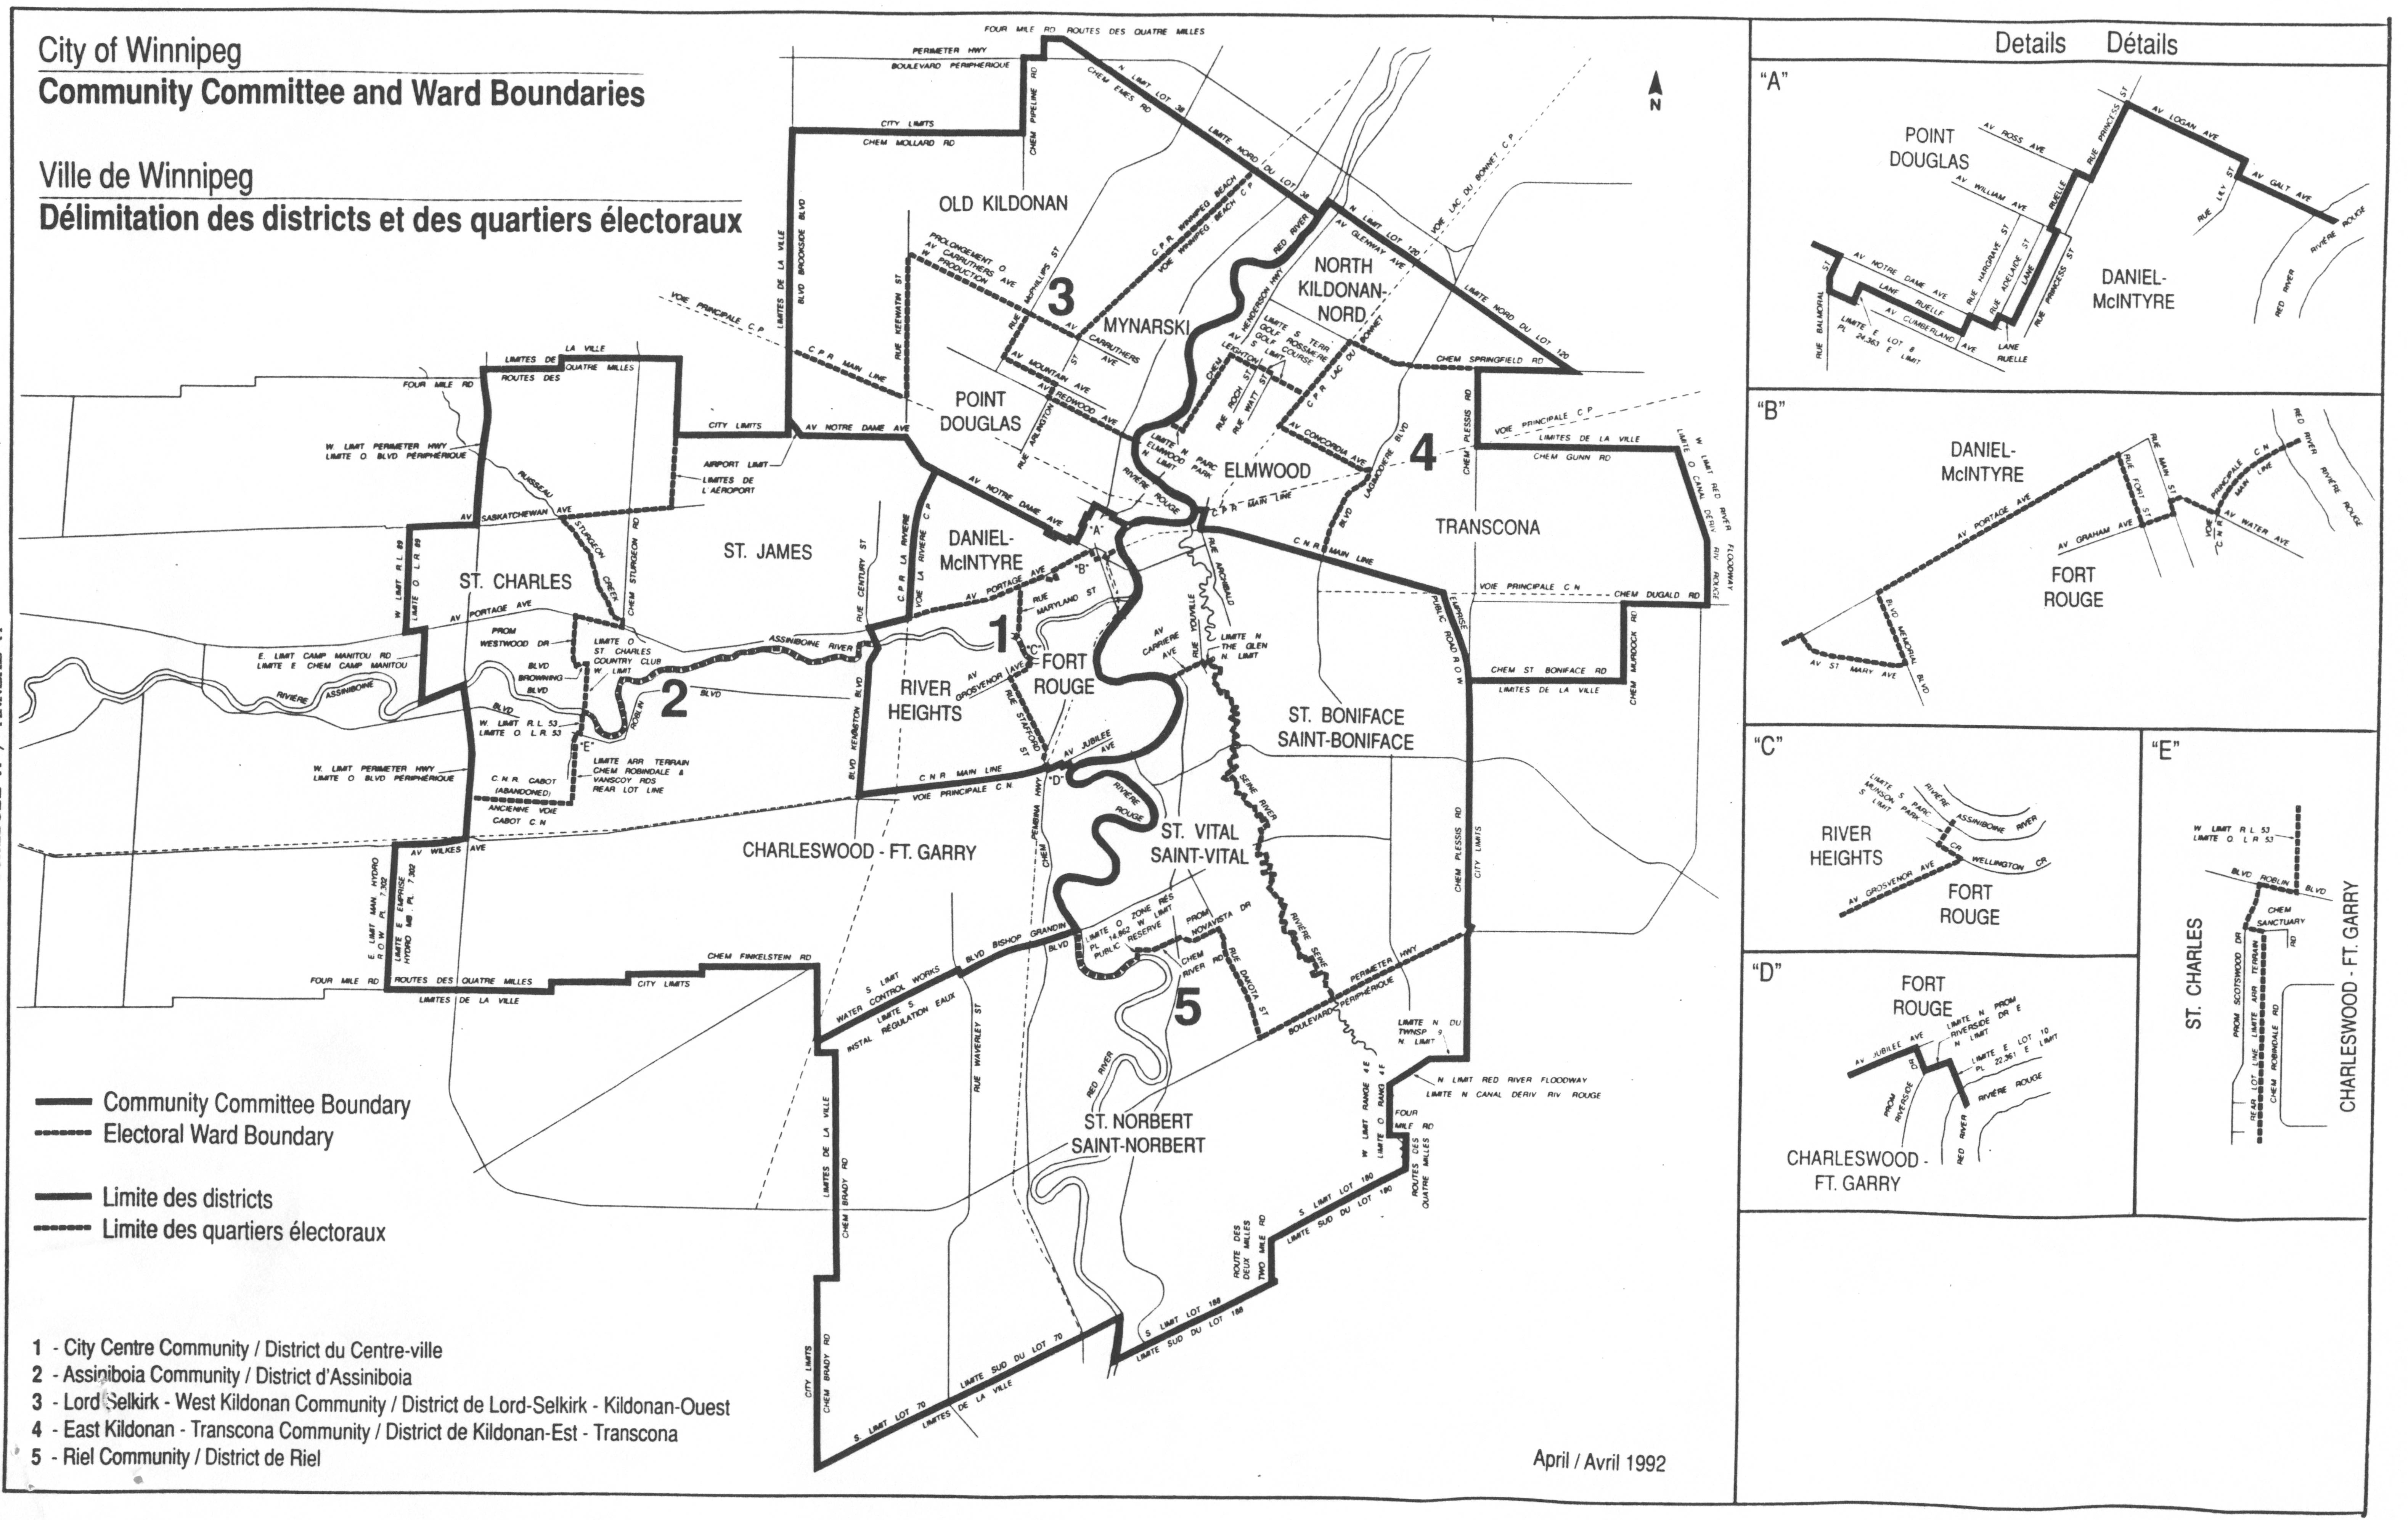 City of Winnipeg community committee and ward boundaries